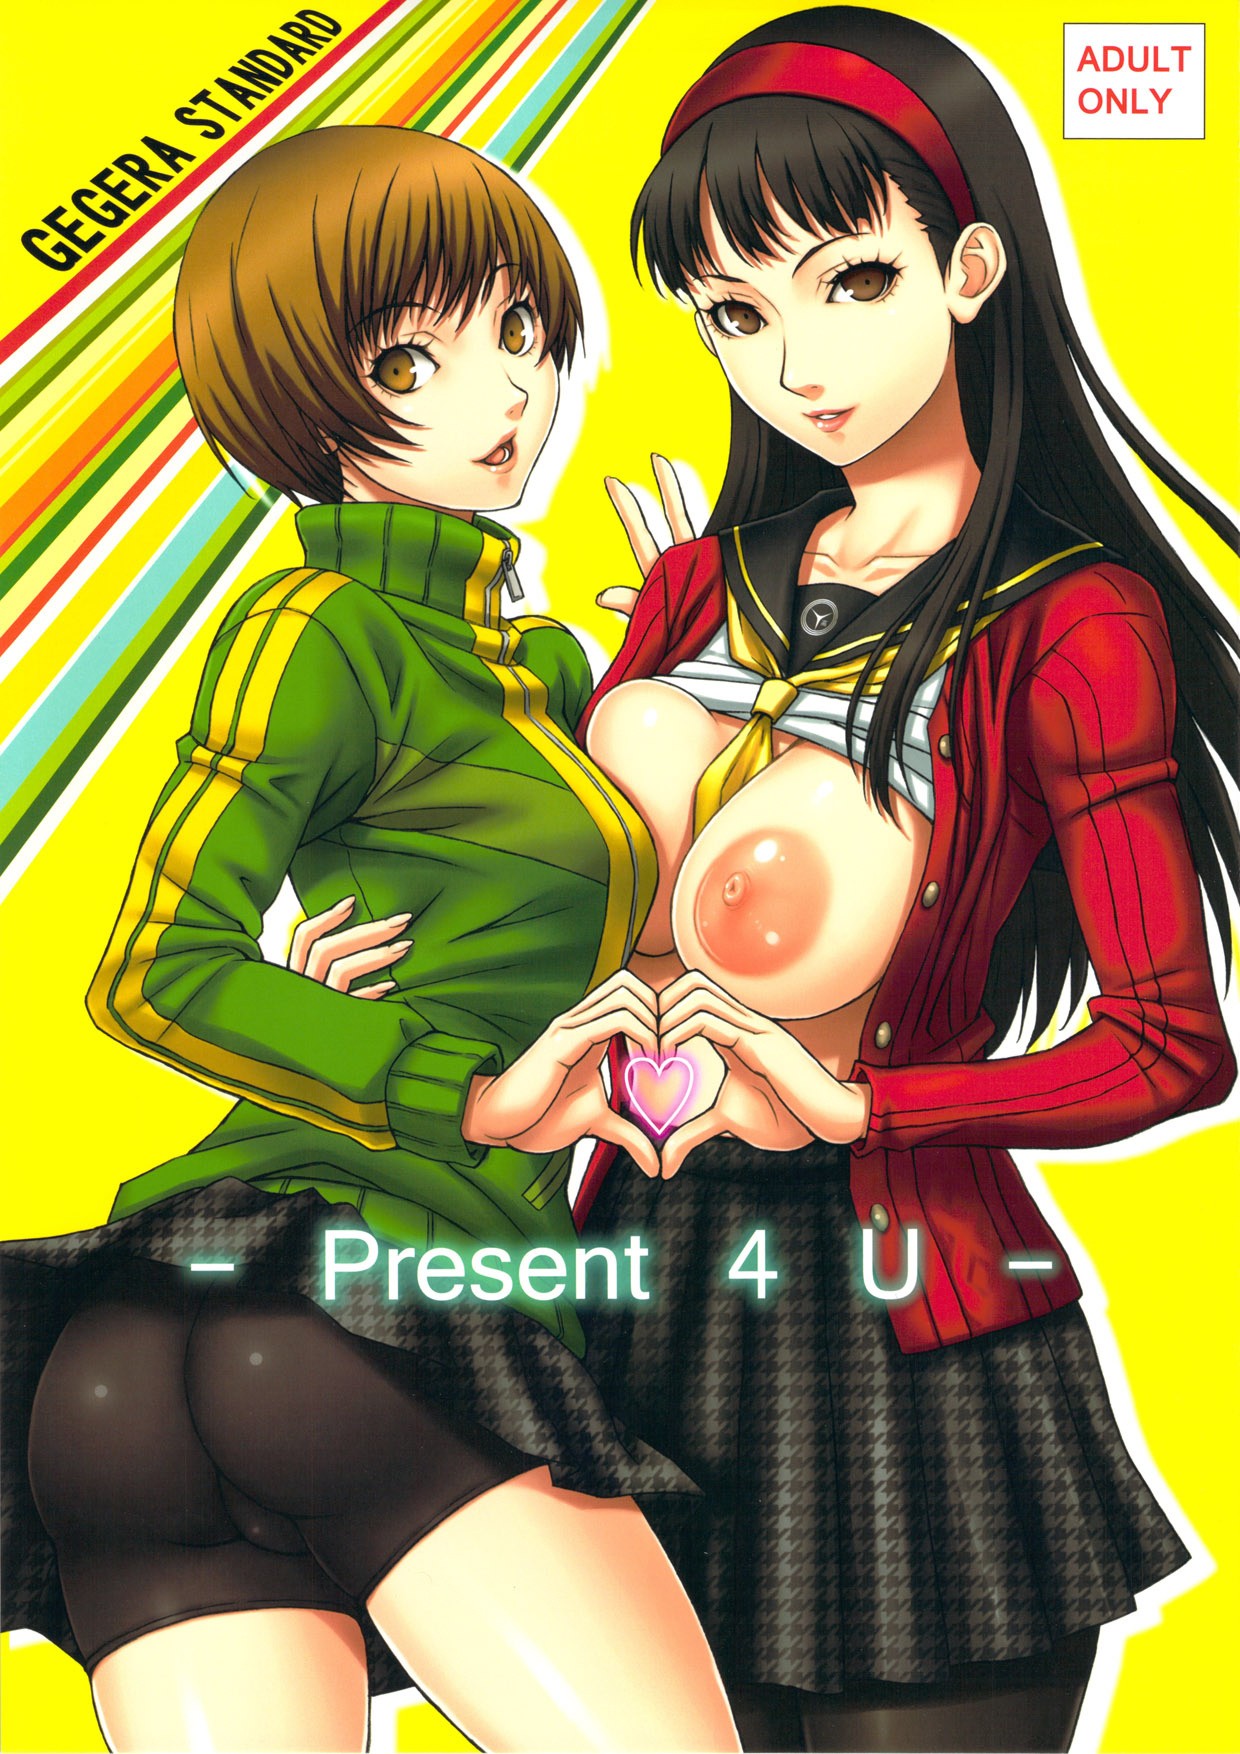 Present 4 U hentai manga picture 1